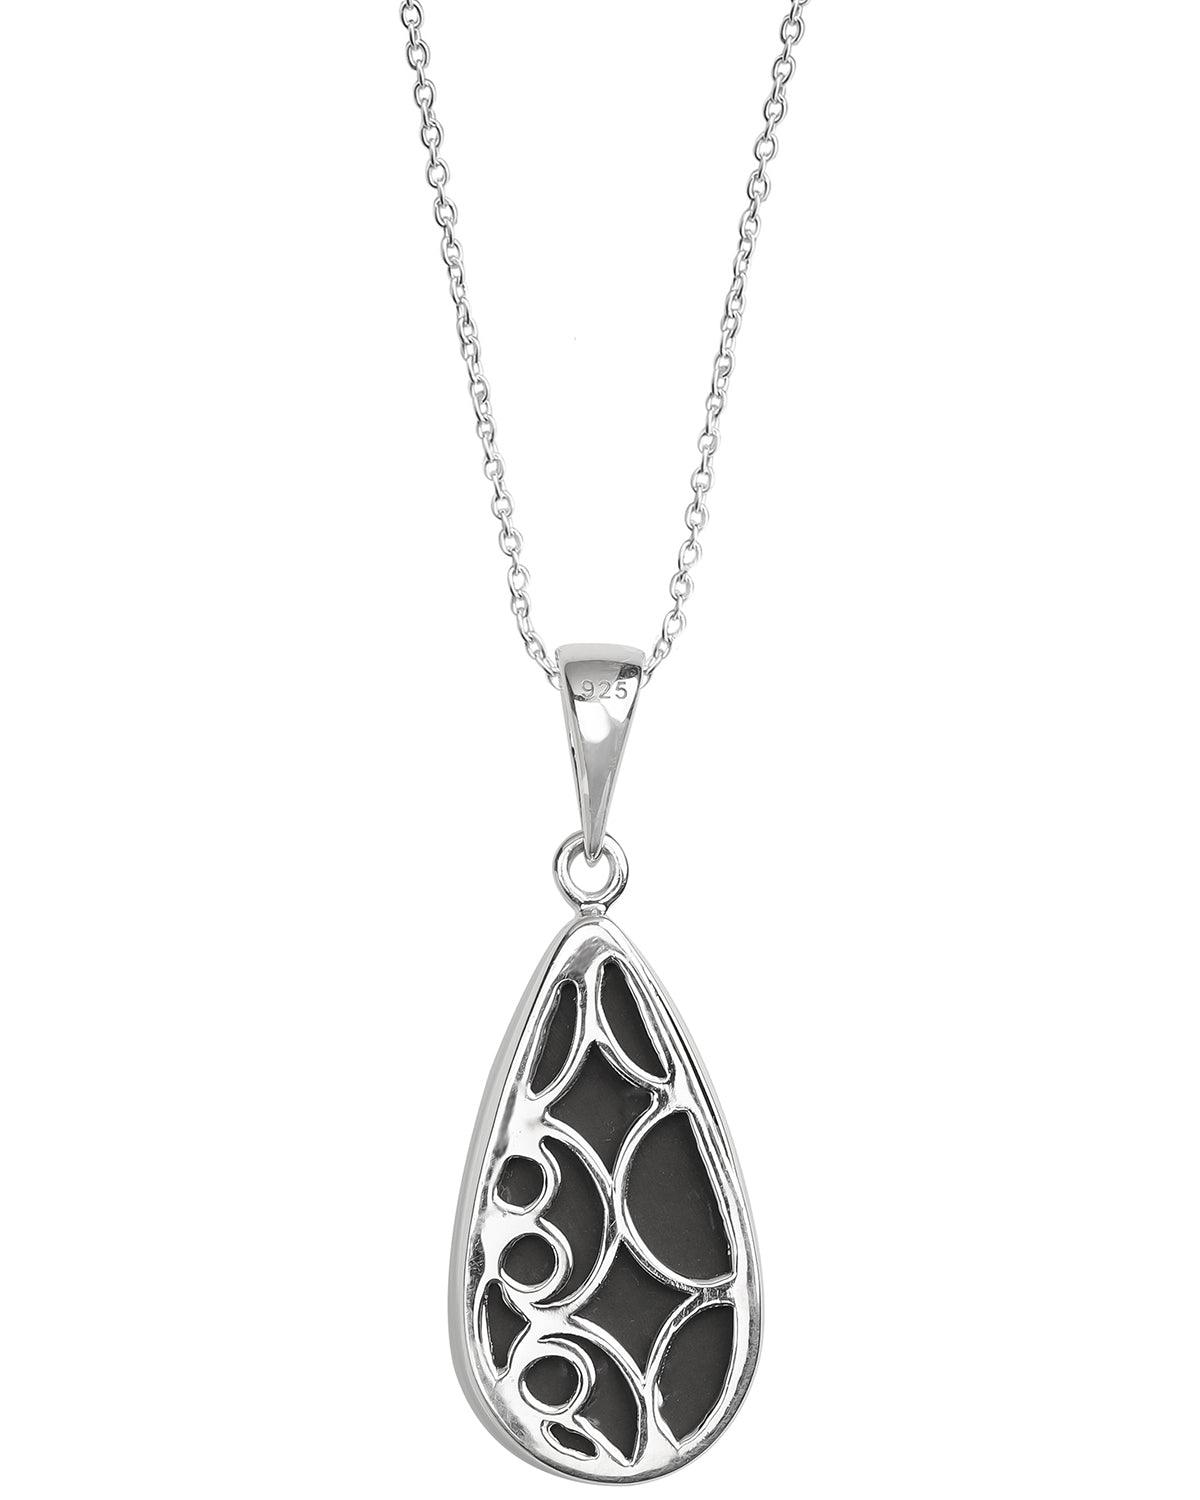 9 Ct. Ammolite 925 Sterling Silver Necklace Pendant Jewelry - YoTreasure